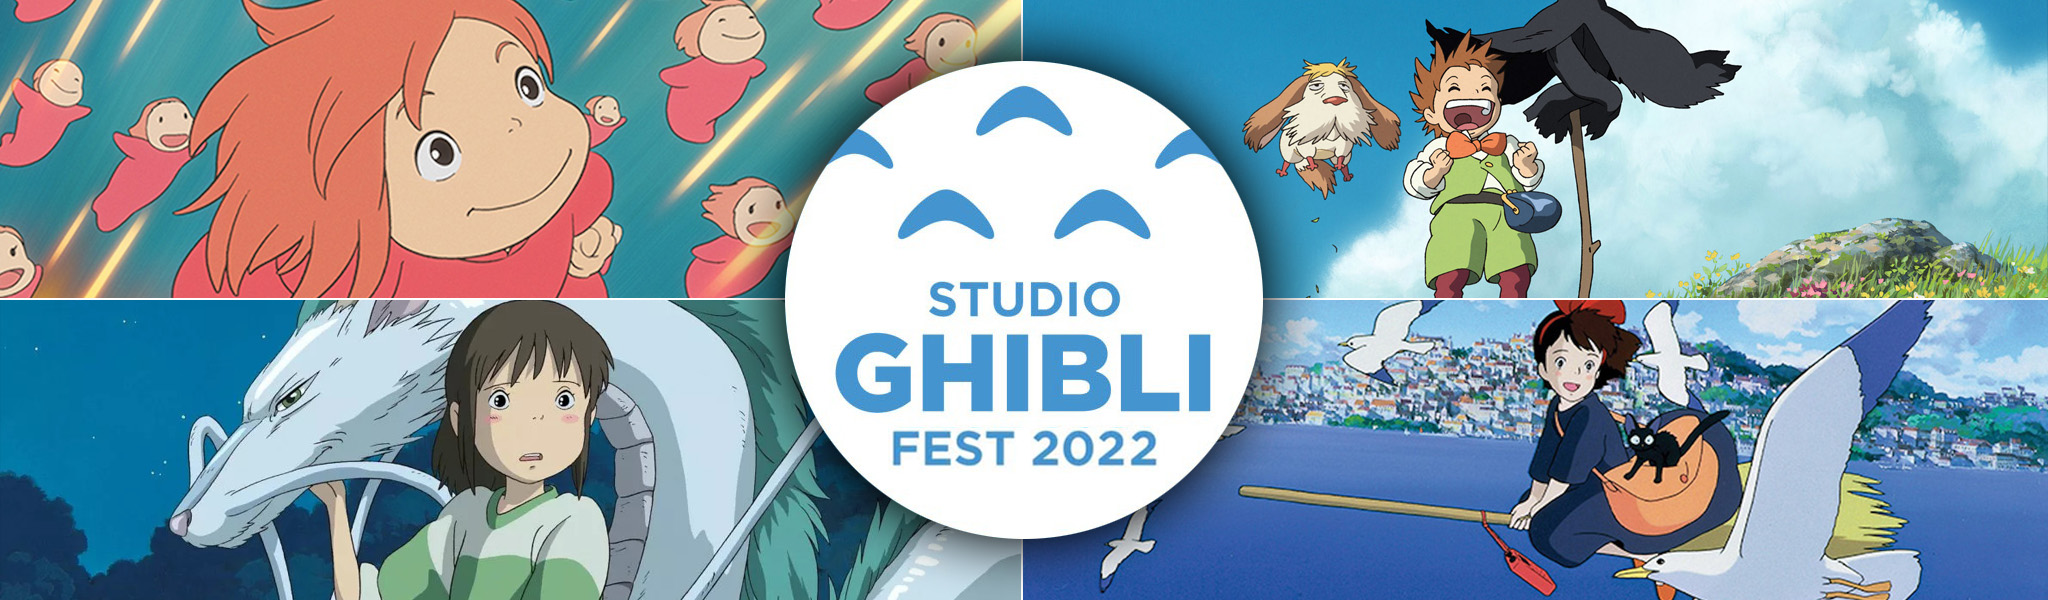 Fathom Events Studio Ghibli